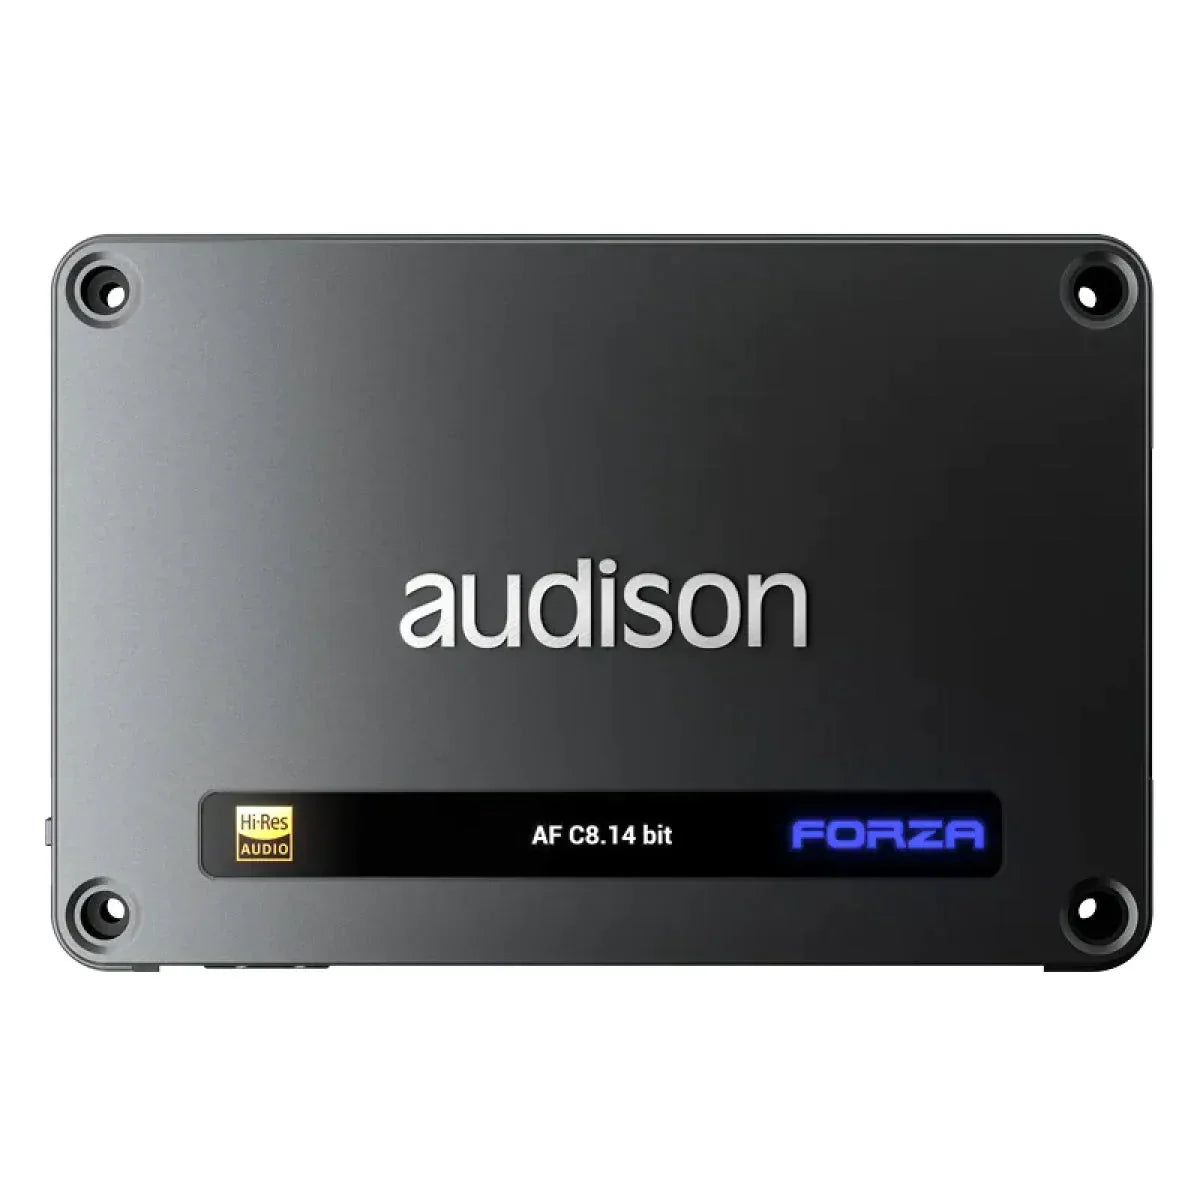 Buy Audison Forza AF C8.14 bit 8 channel DSP amplifier - Masori.co.uk